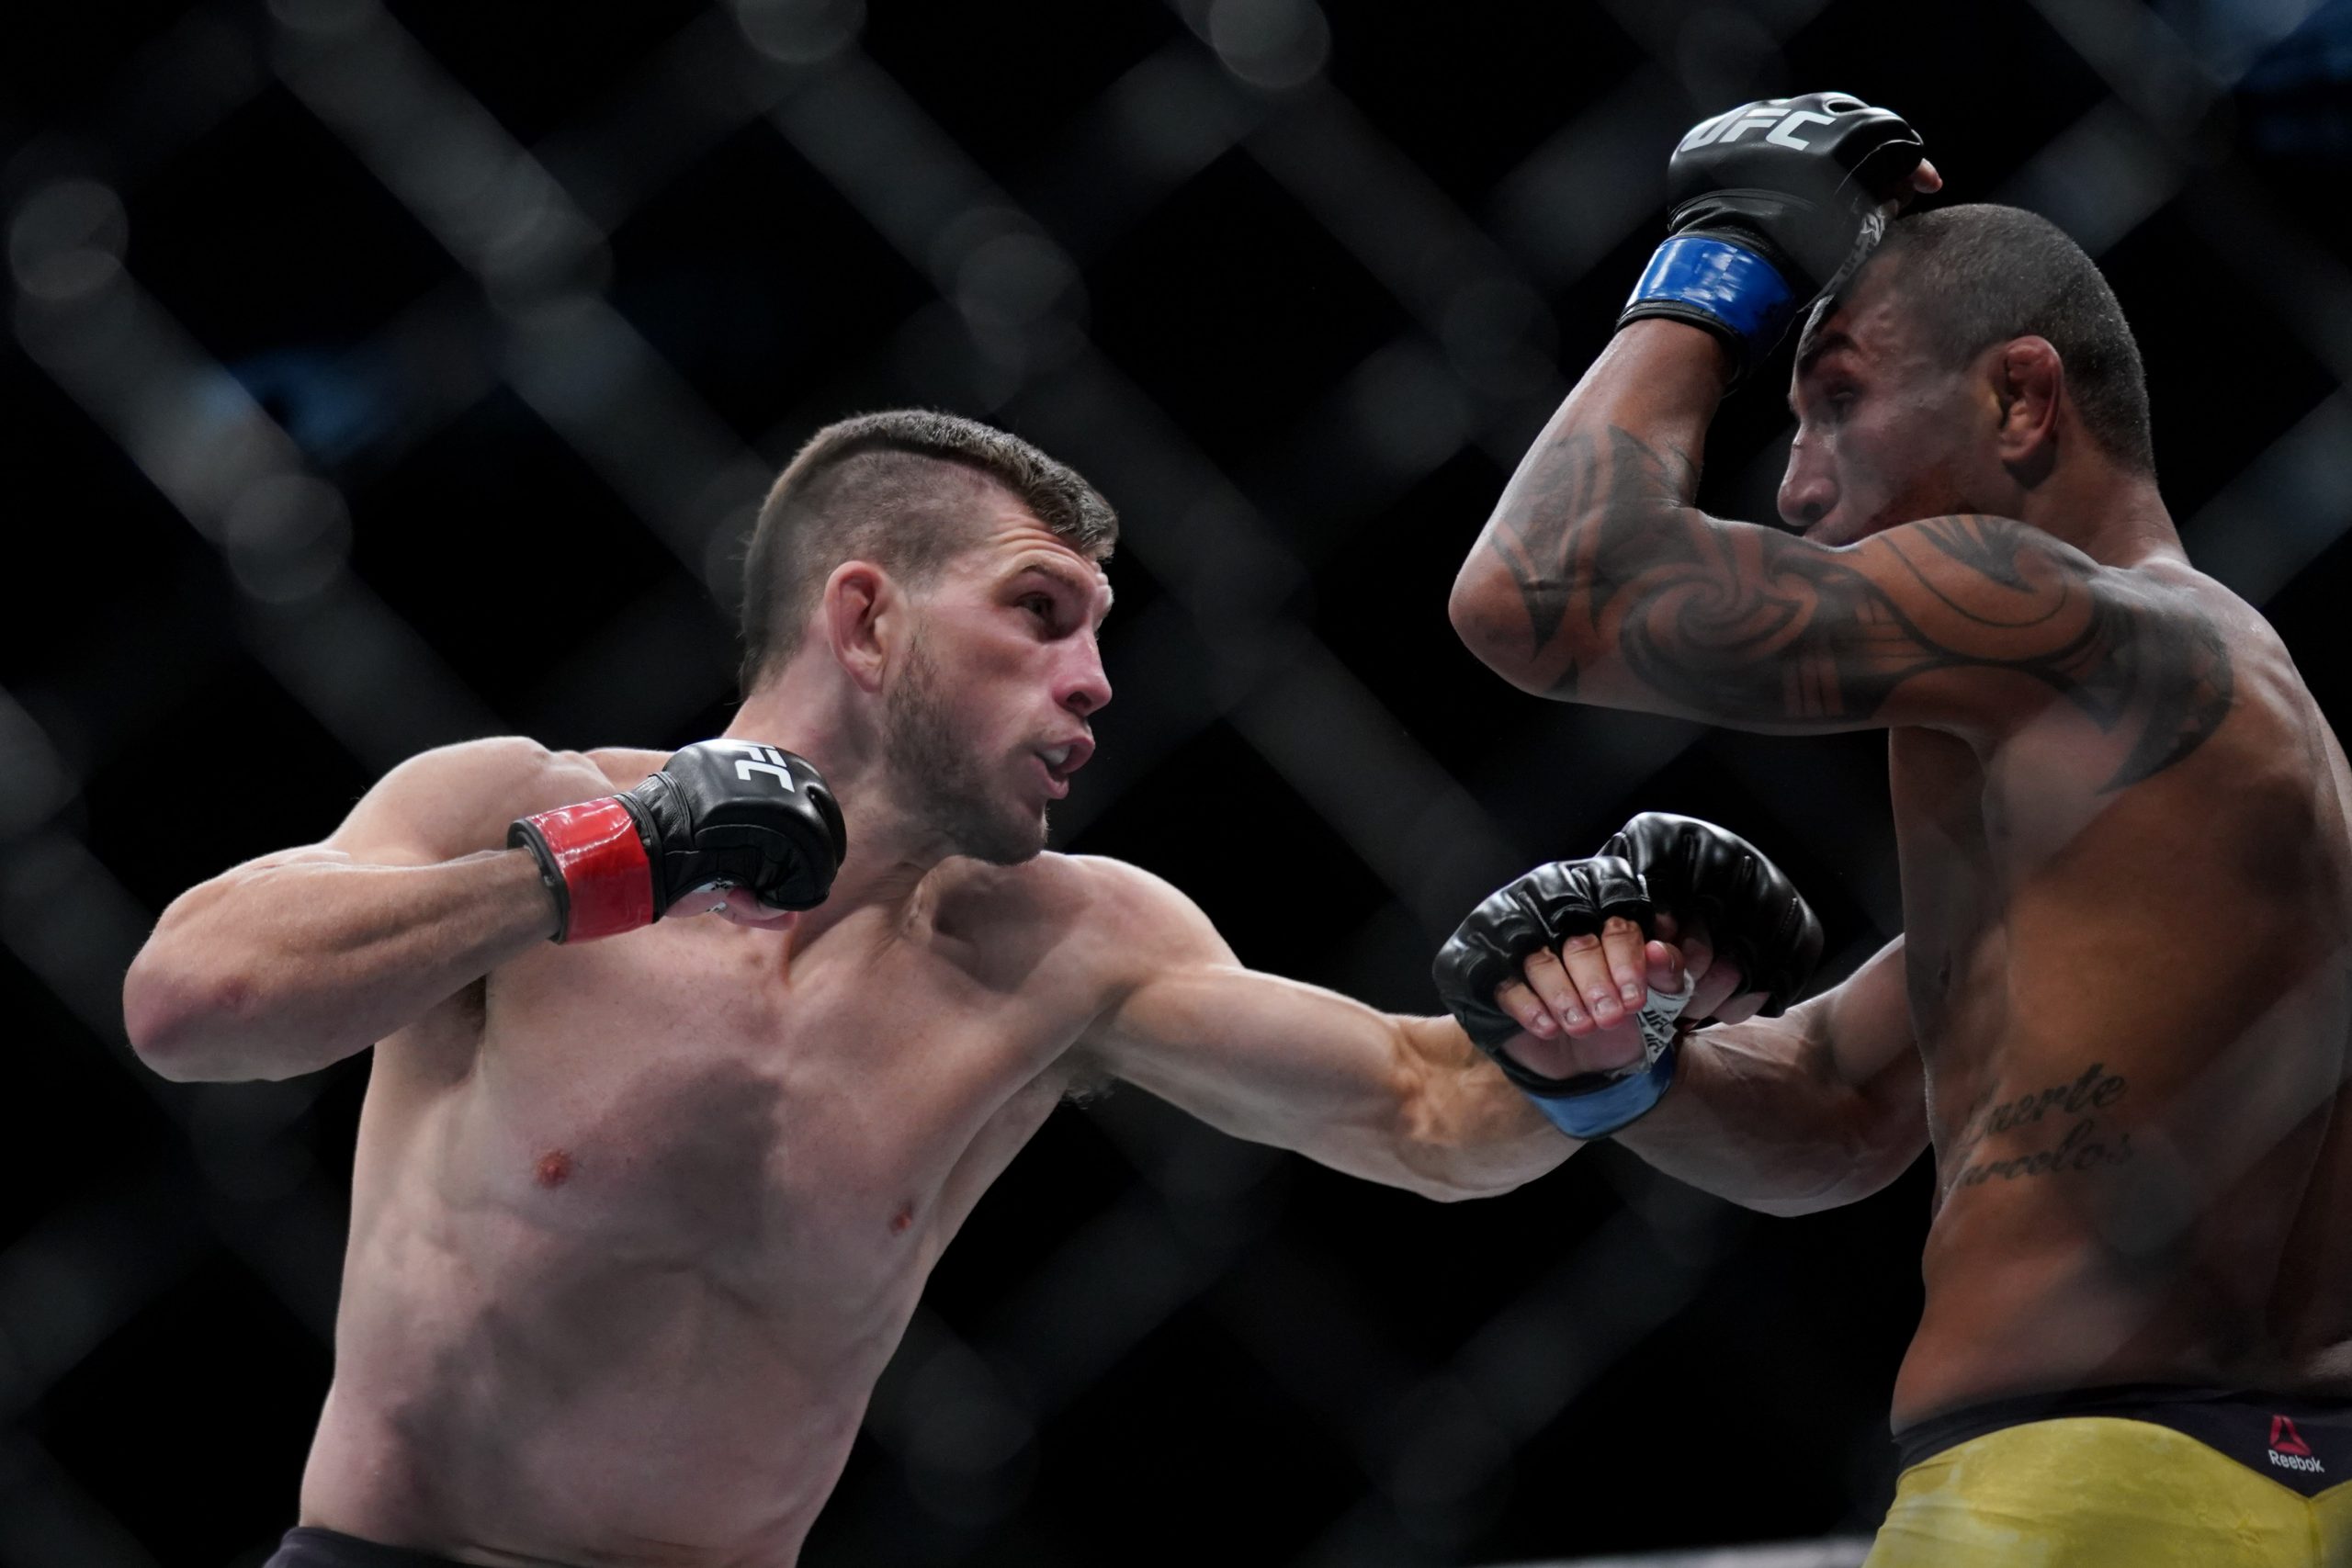 MMA: UFC Fight Night-Boise-Holobaugh vs Barcelos